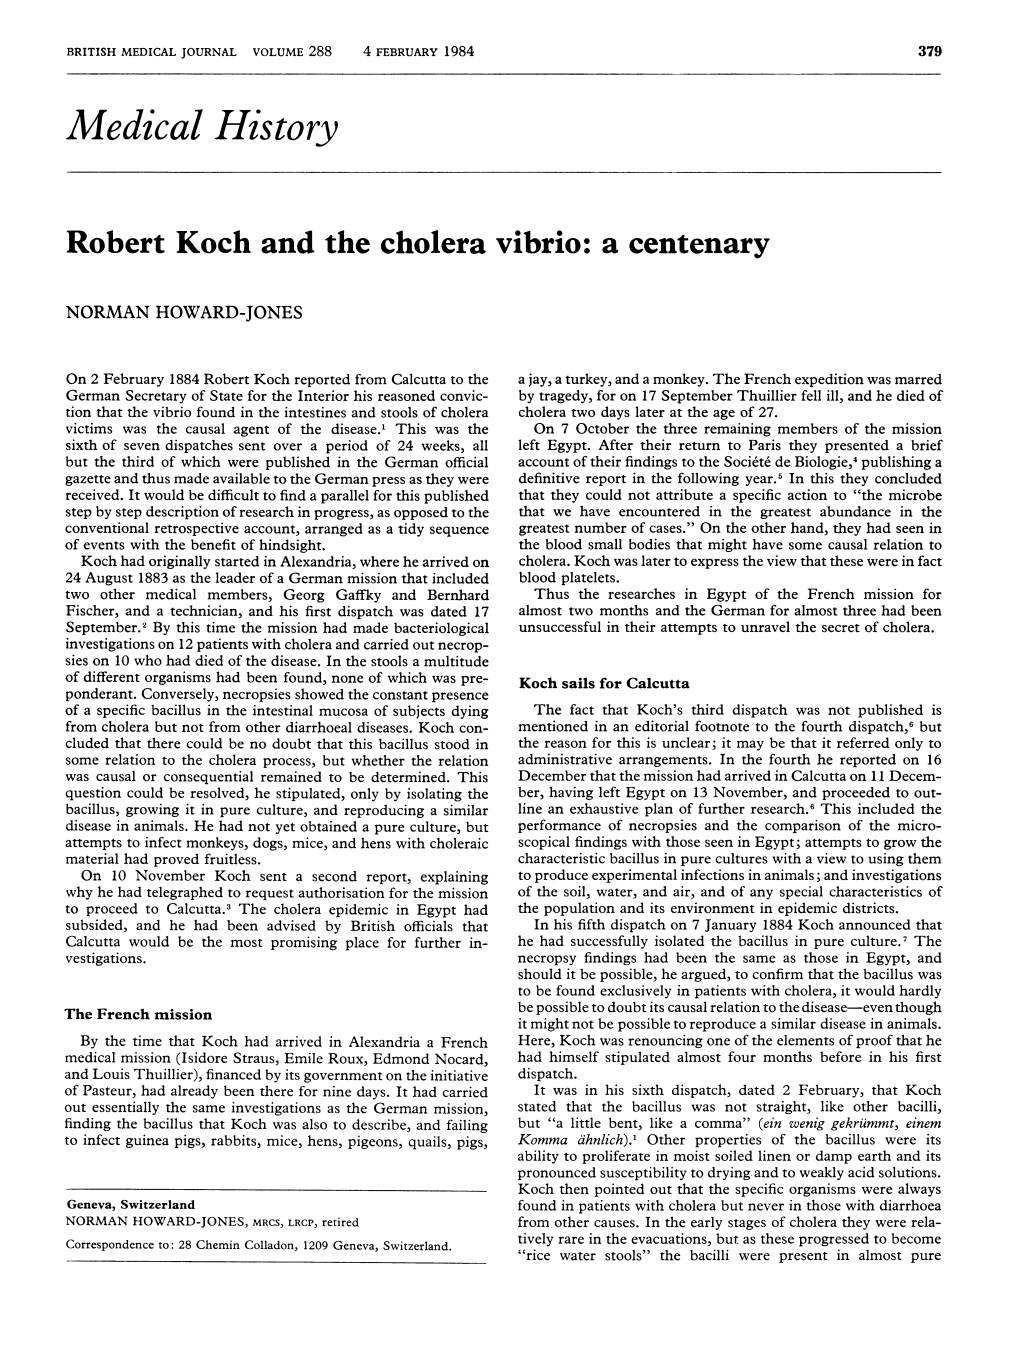 Robert Koch and the Cholera Vibrio: a Centenary